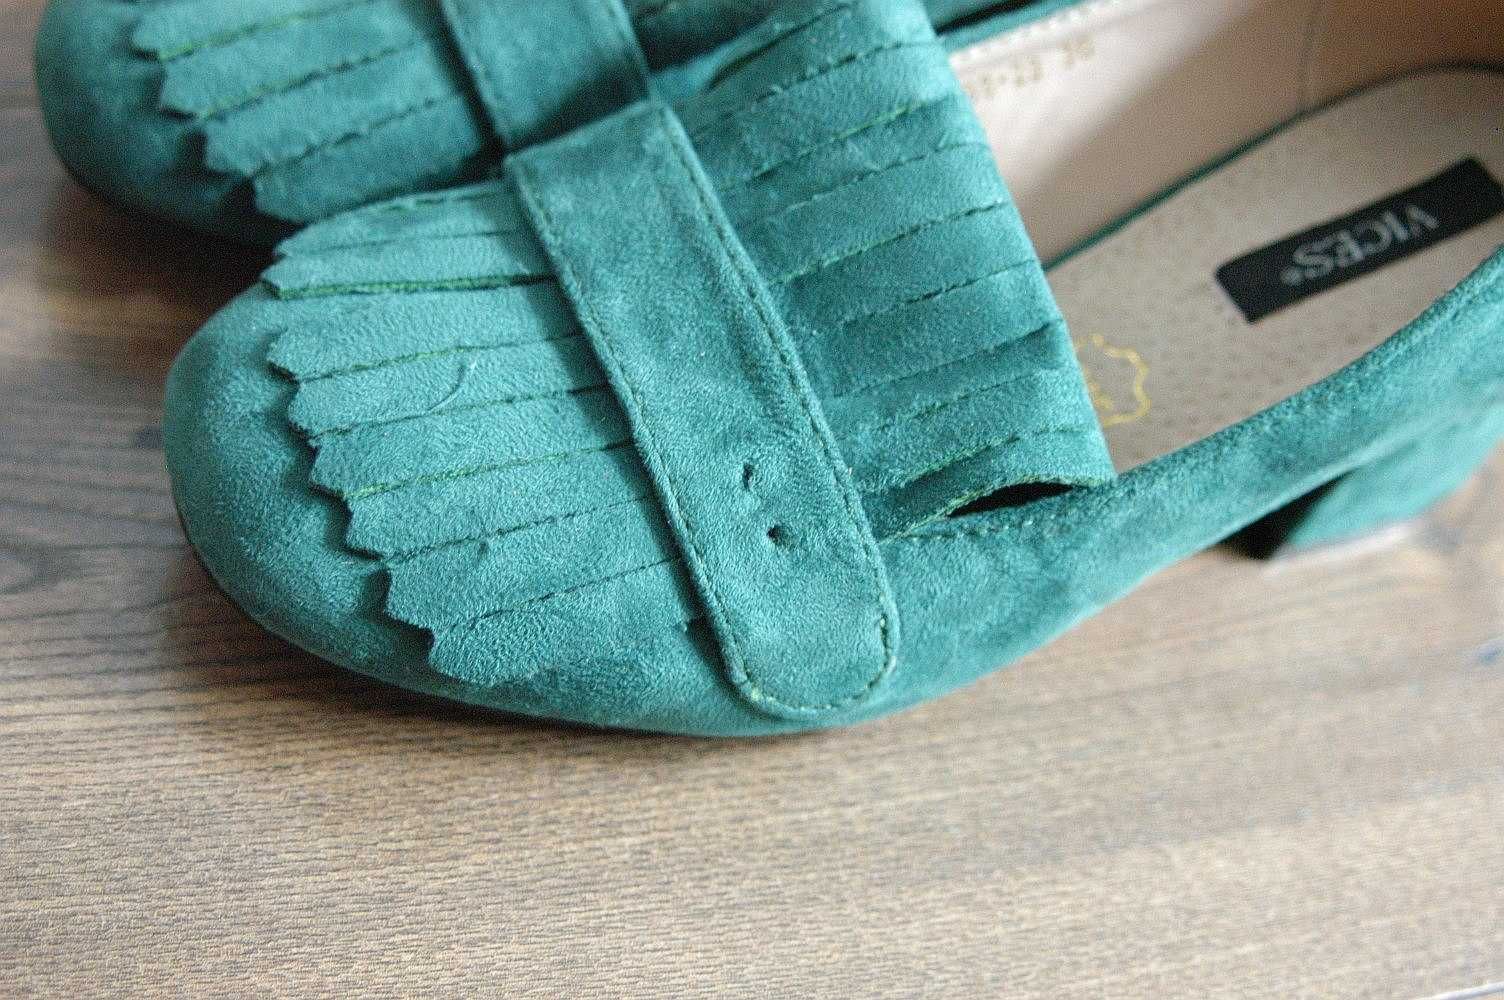 damskie buty na obcasie VICES - zielone - rozmiar 36